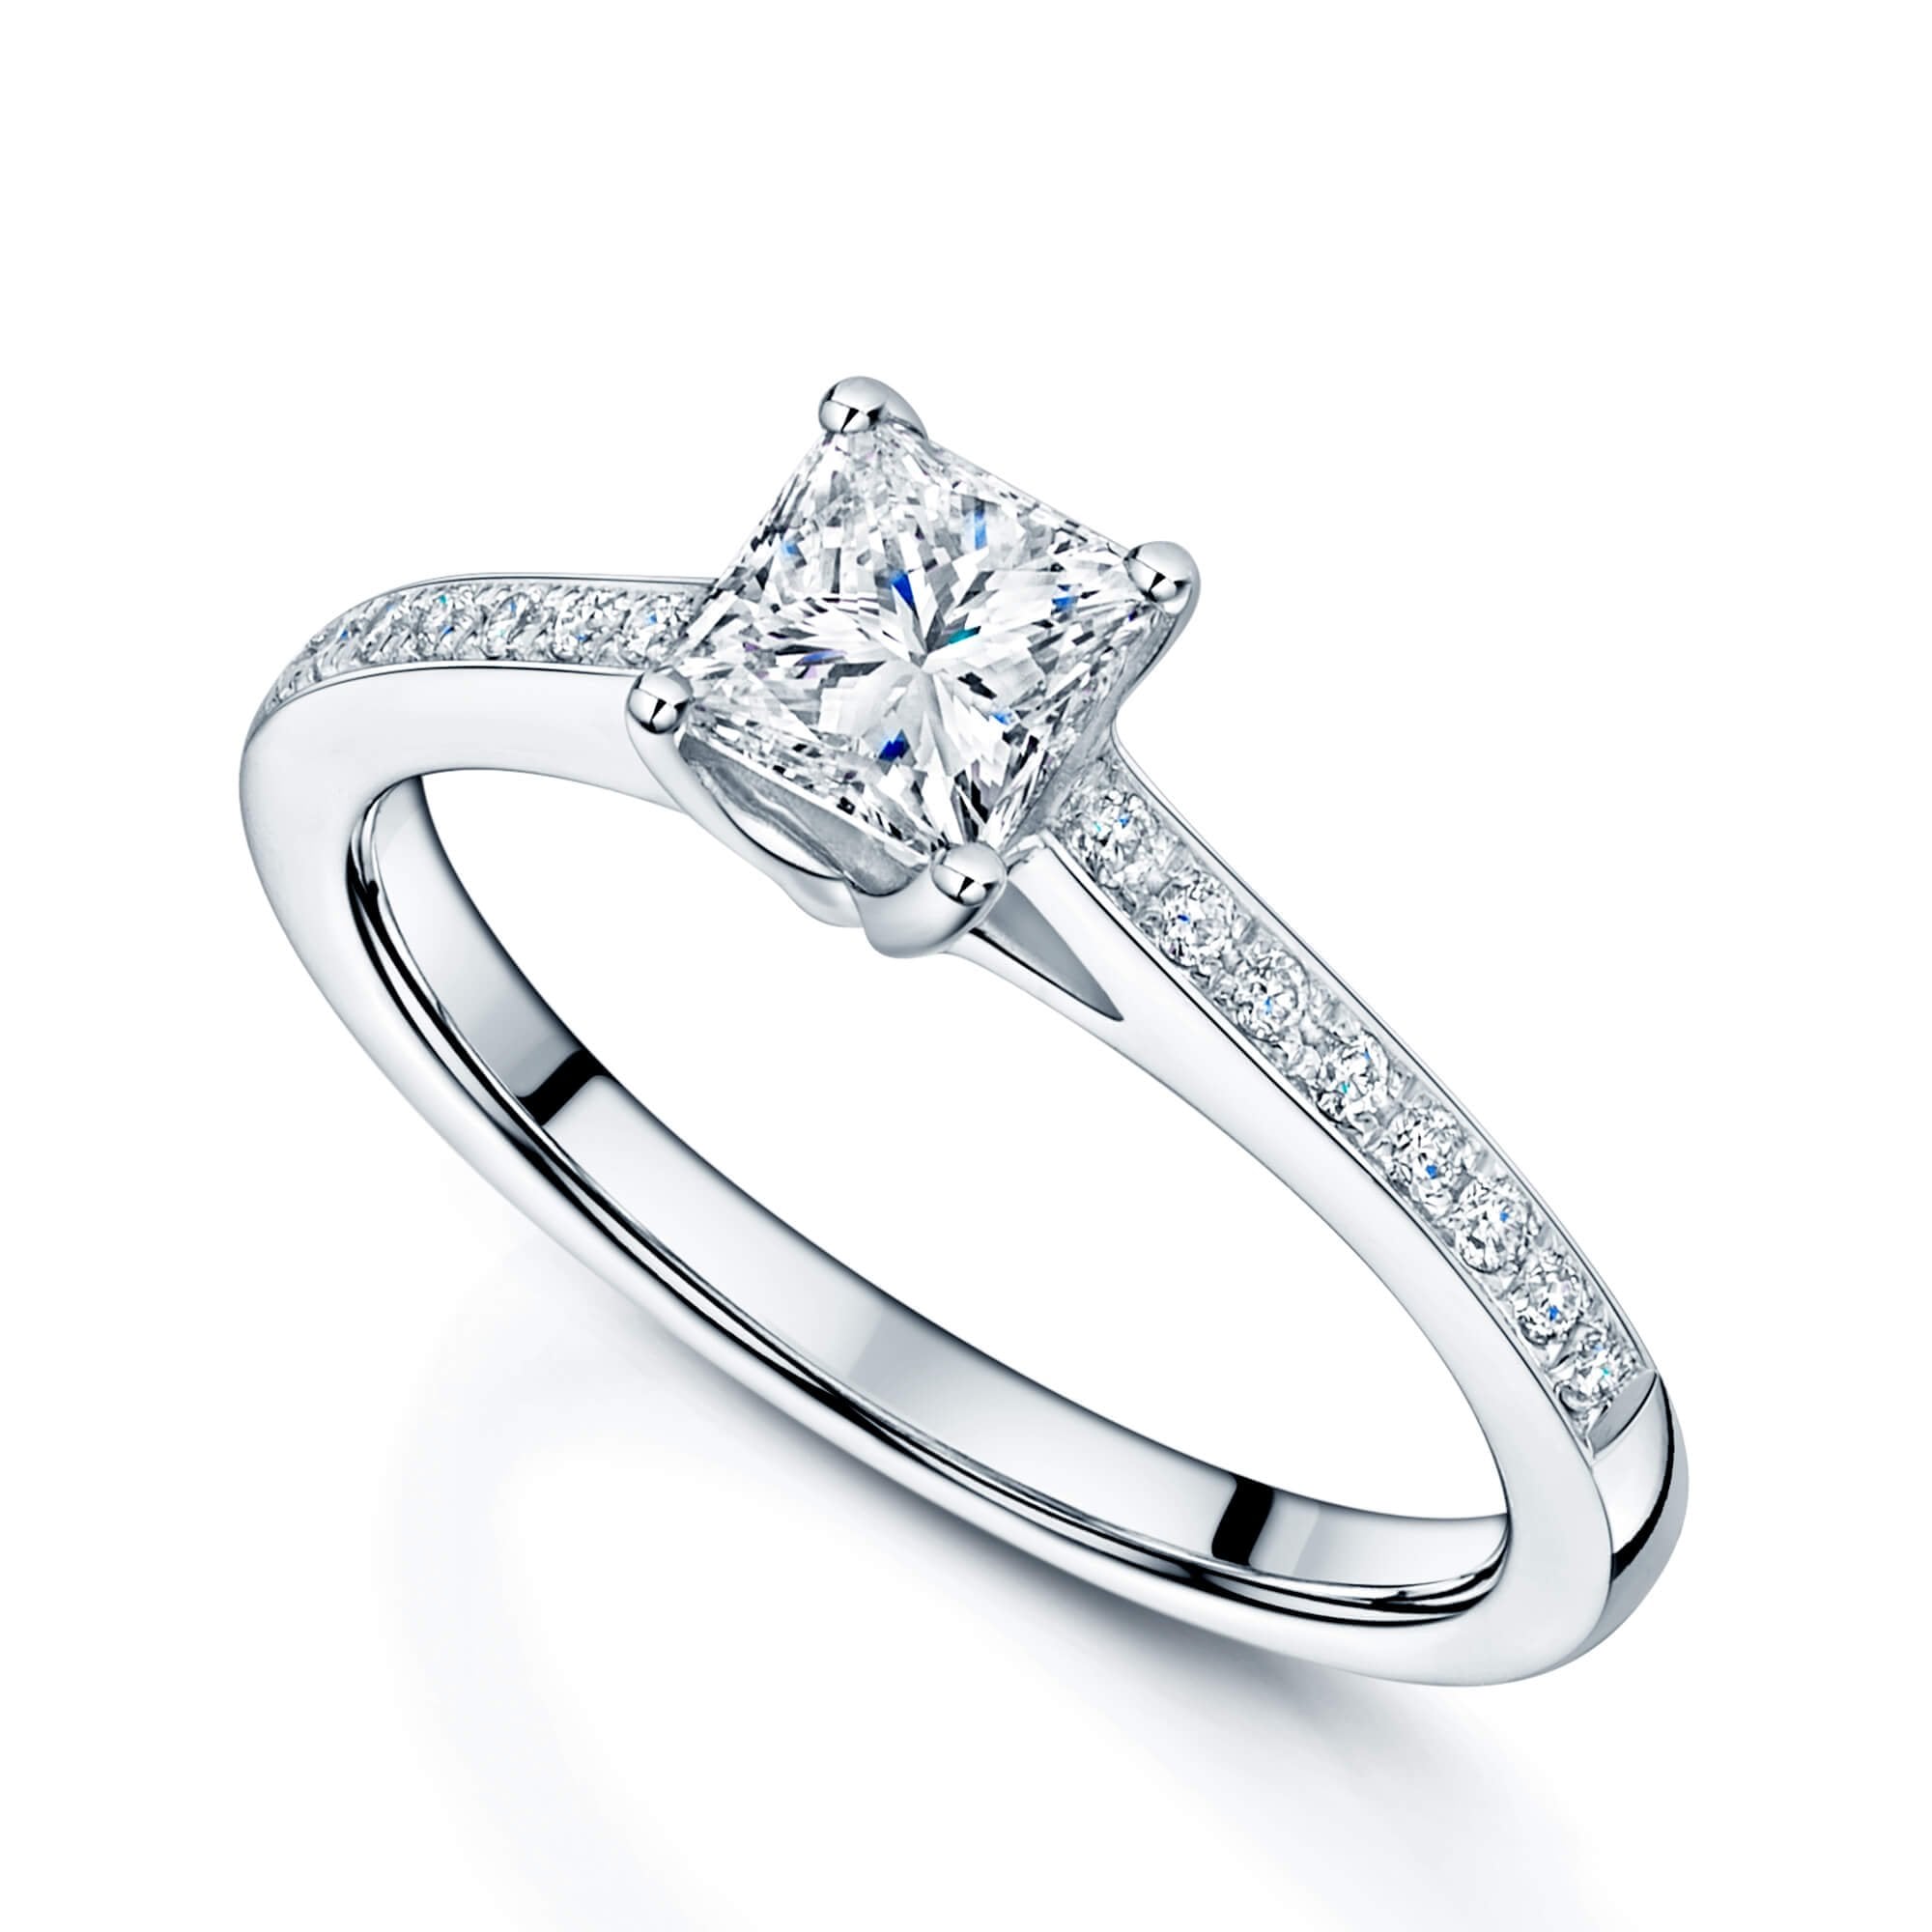 Platinum Princess Cut 0.71 Carat Diamond Ring With Round Brilliant Cut Diamond Set Shoulders 0.22 Carat